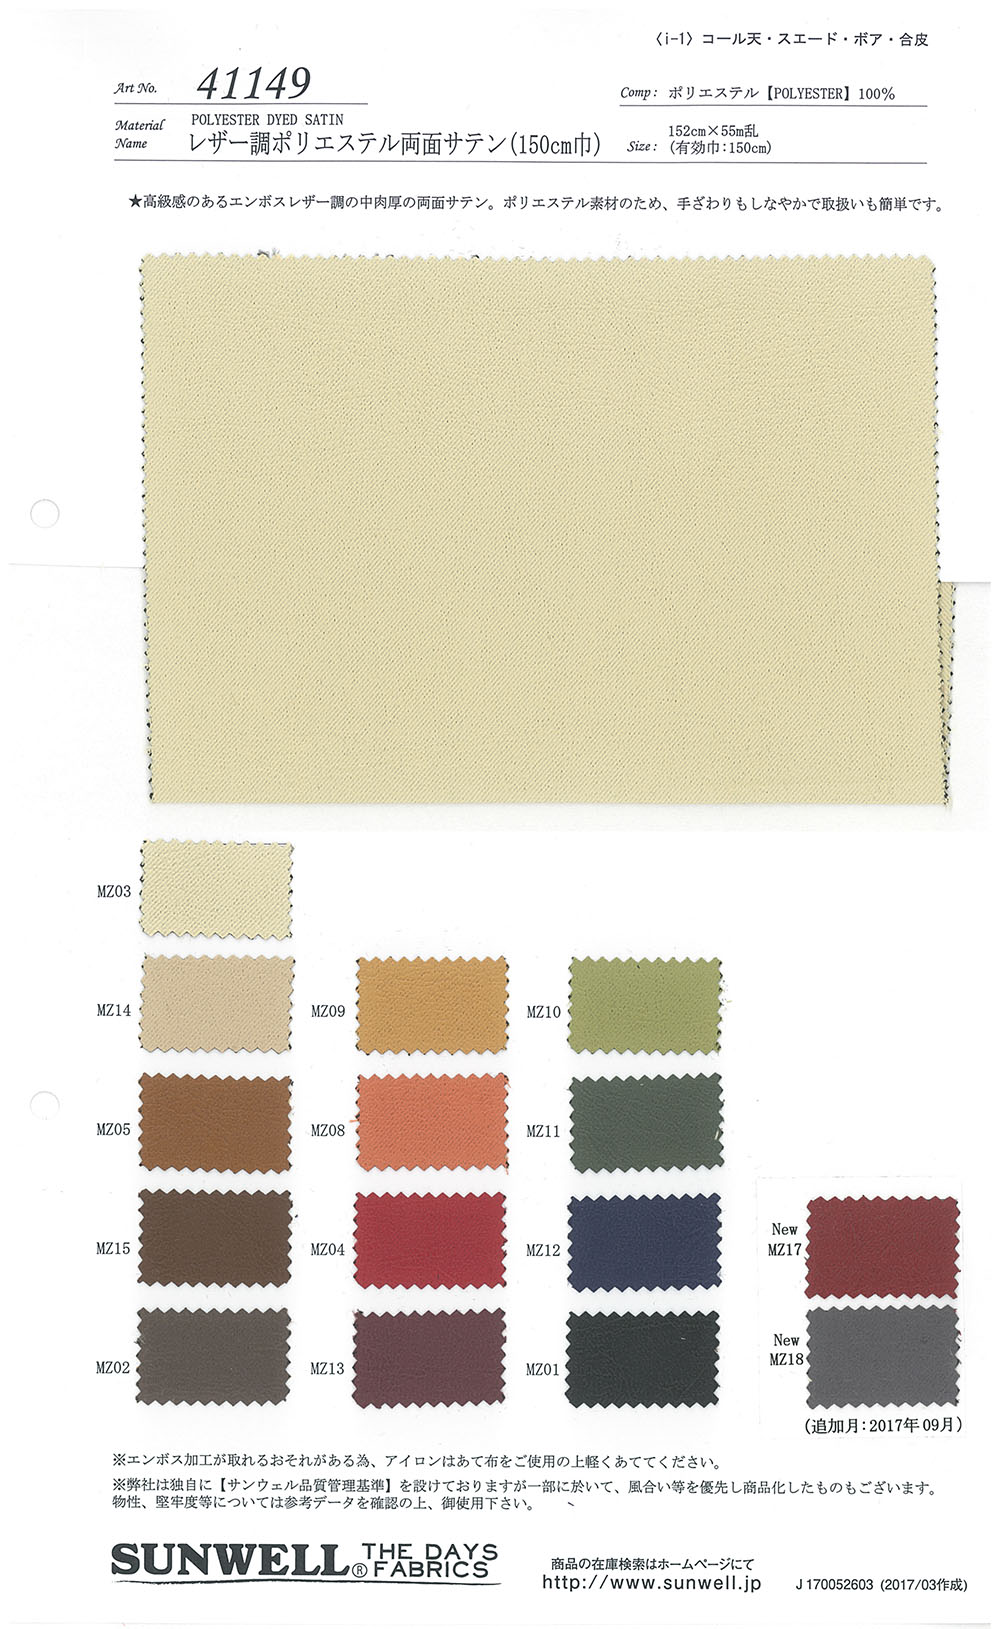 41149 Lederähnlicher Polyester, Doppelseitiger Satin (150 Cm Breite)[Textilgewebe] SUNWELL